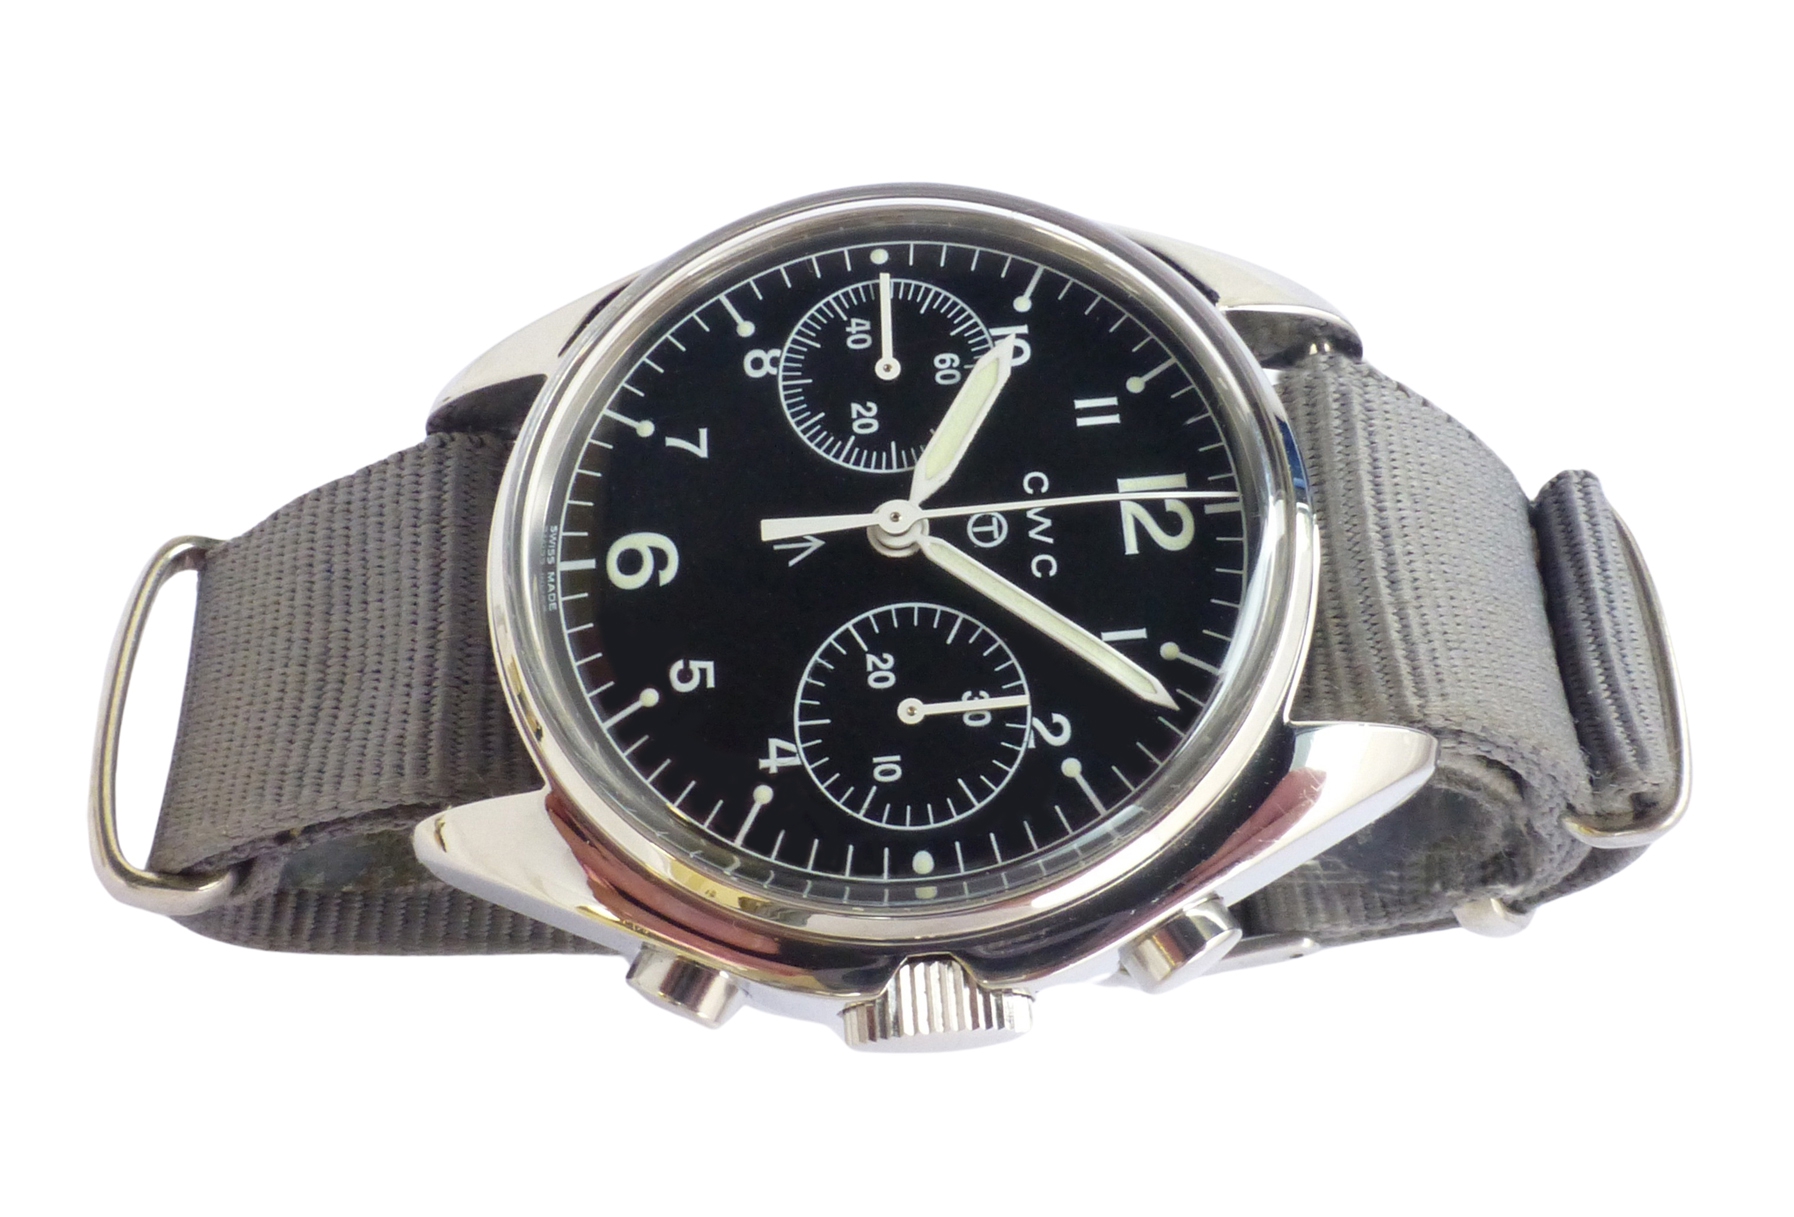 CWC Pilot Chronograph 1970s Reissue Ltd Edition Mechanical Watch NWW 2163